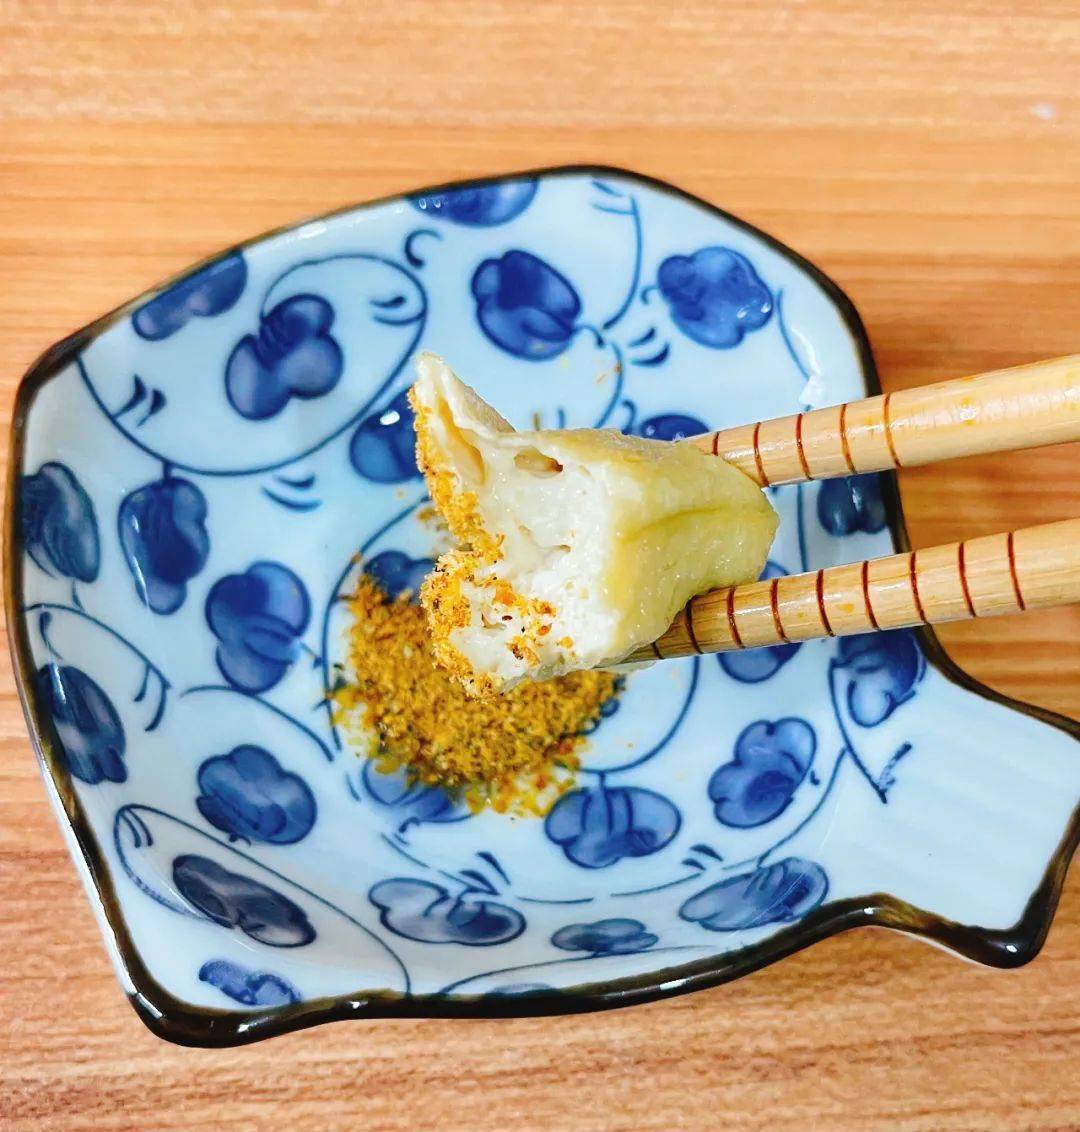 Kit Wai's kitchen : 黄金奶油豆腐 ~ Golden Tofu with Creamy Pumpkin Gravy